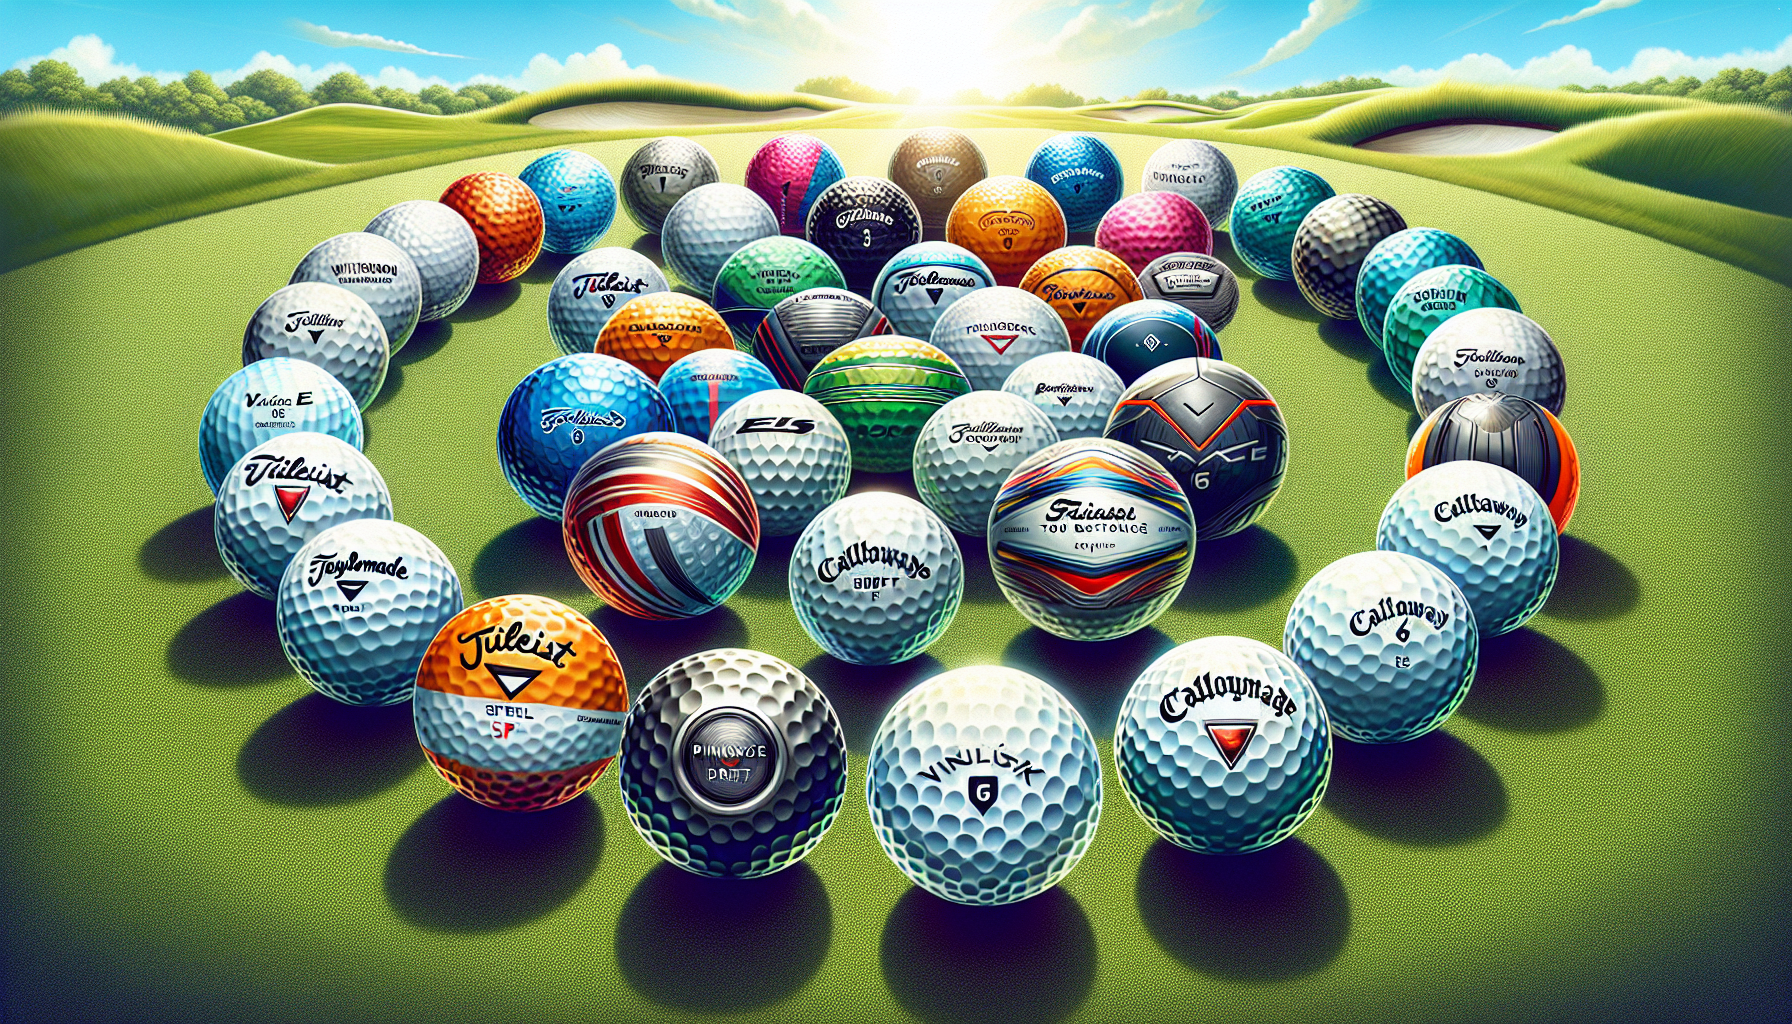 Illustration of different types of golf balls